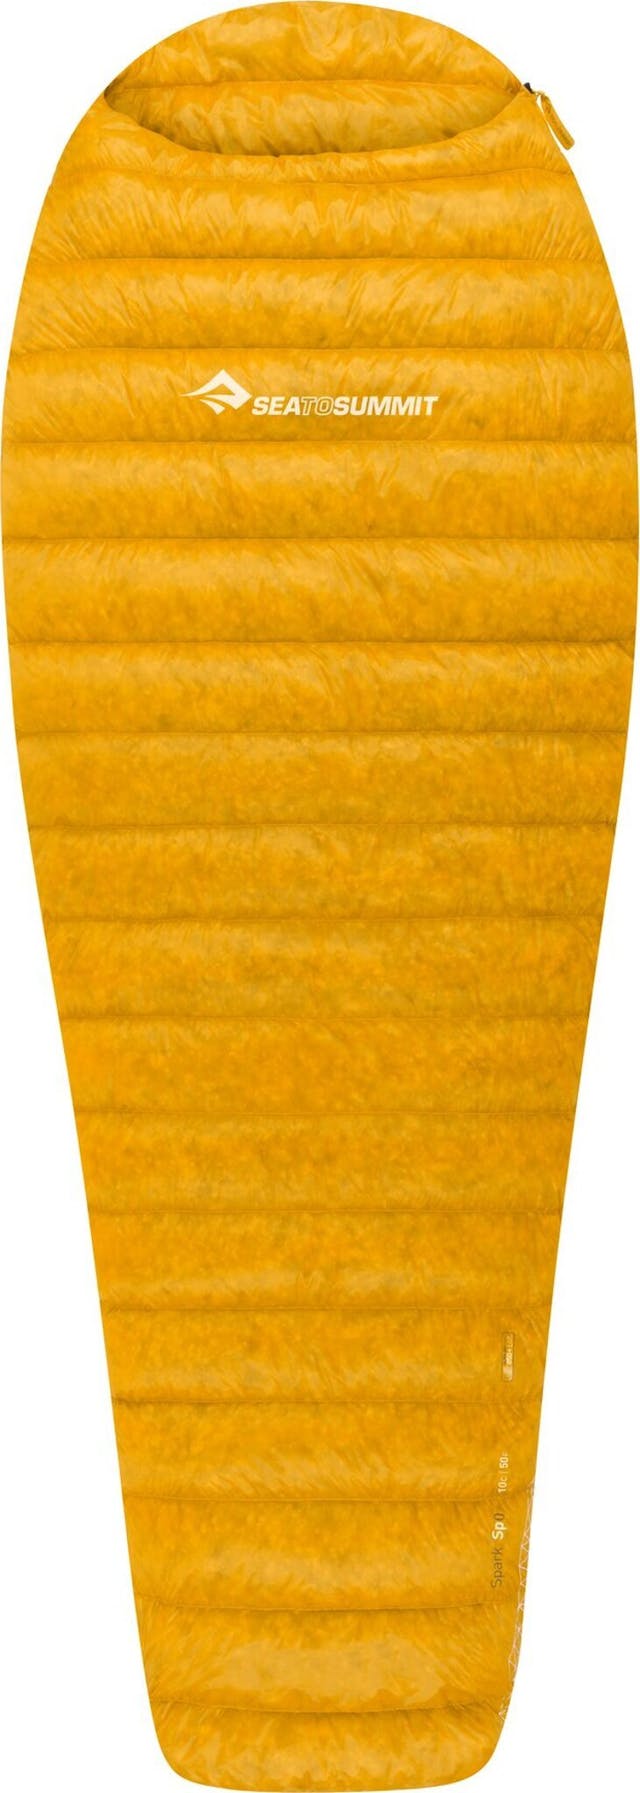 Product image for Spark SP0 Down Sleeping Bag - Regular - 50°F - 10°C - Unisex